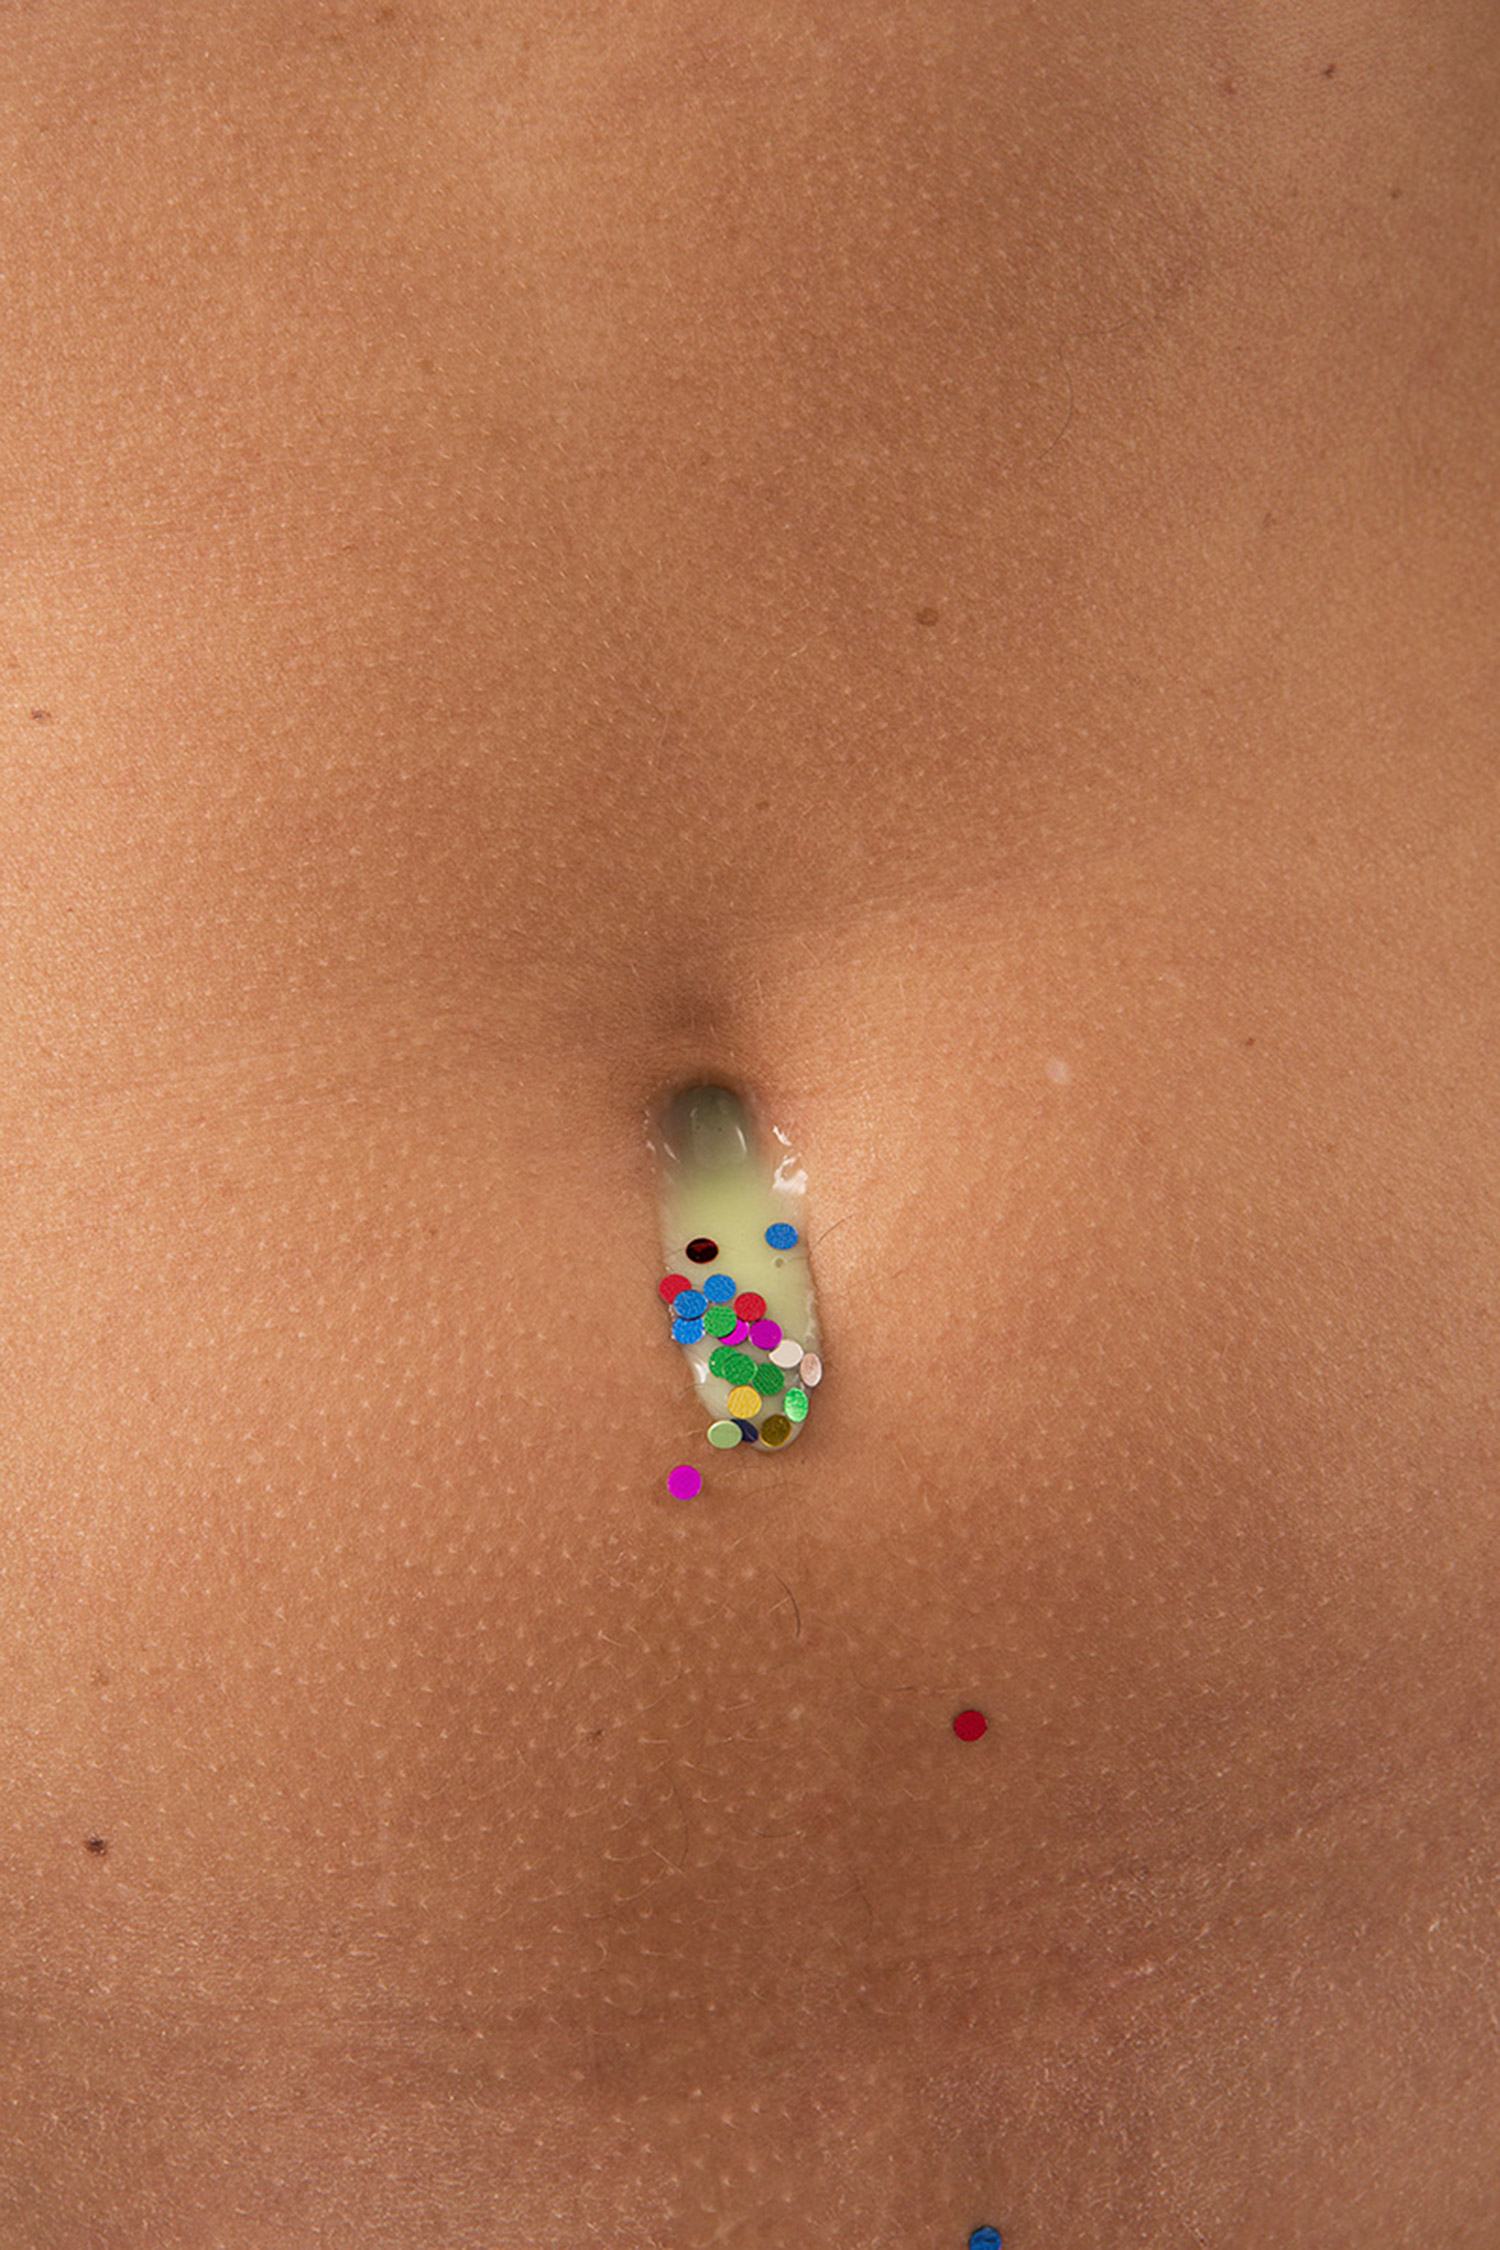 Andi Galdi Vinko, Glittercum, navel filled with glitter and green liquid